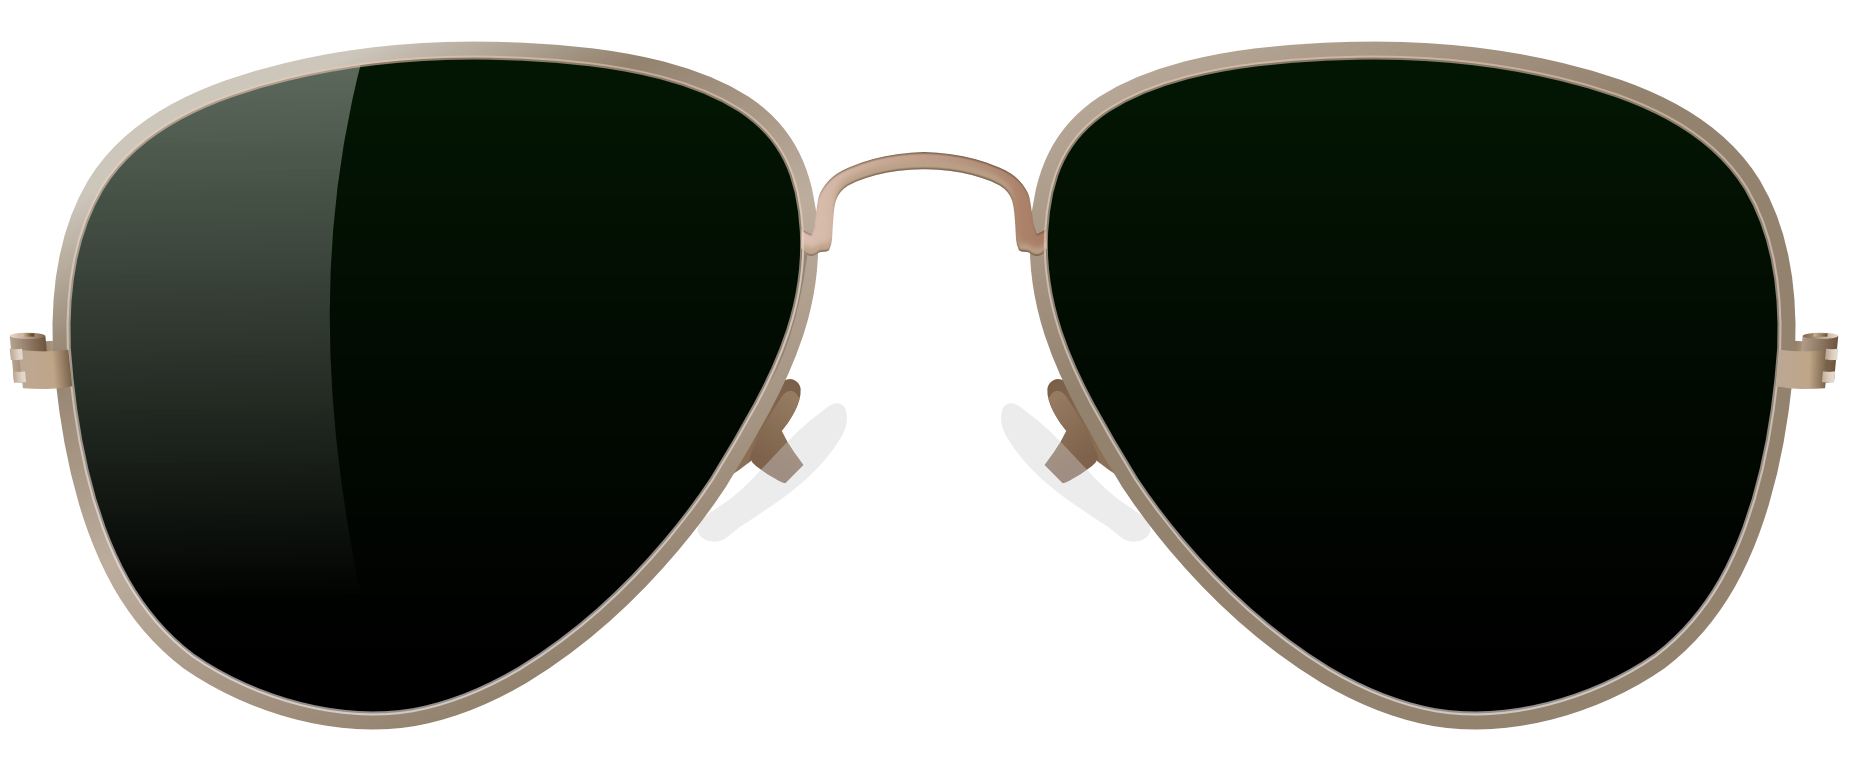 Ray-Ban Sunglasses Aviator Eyewear Download HD PNG Clipart